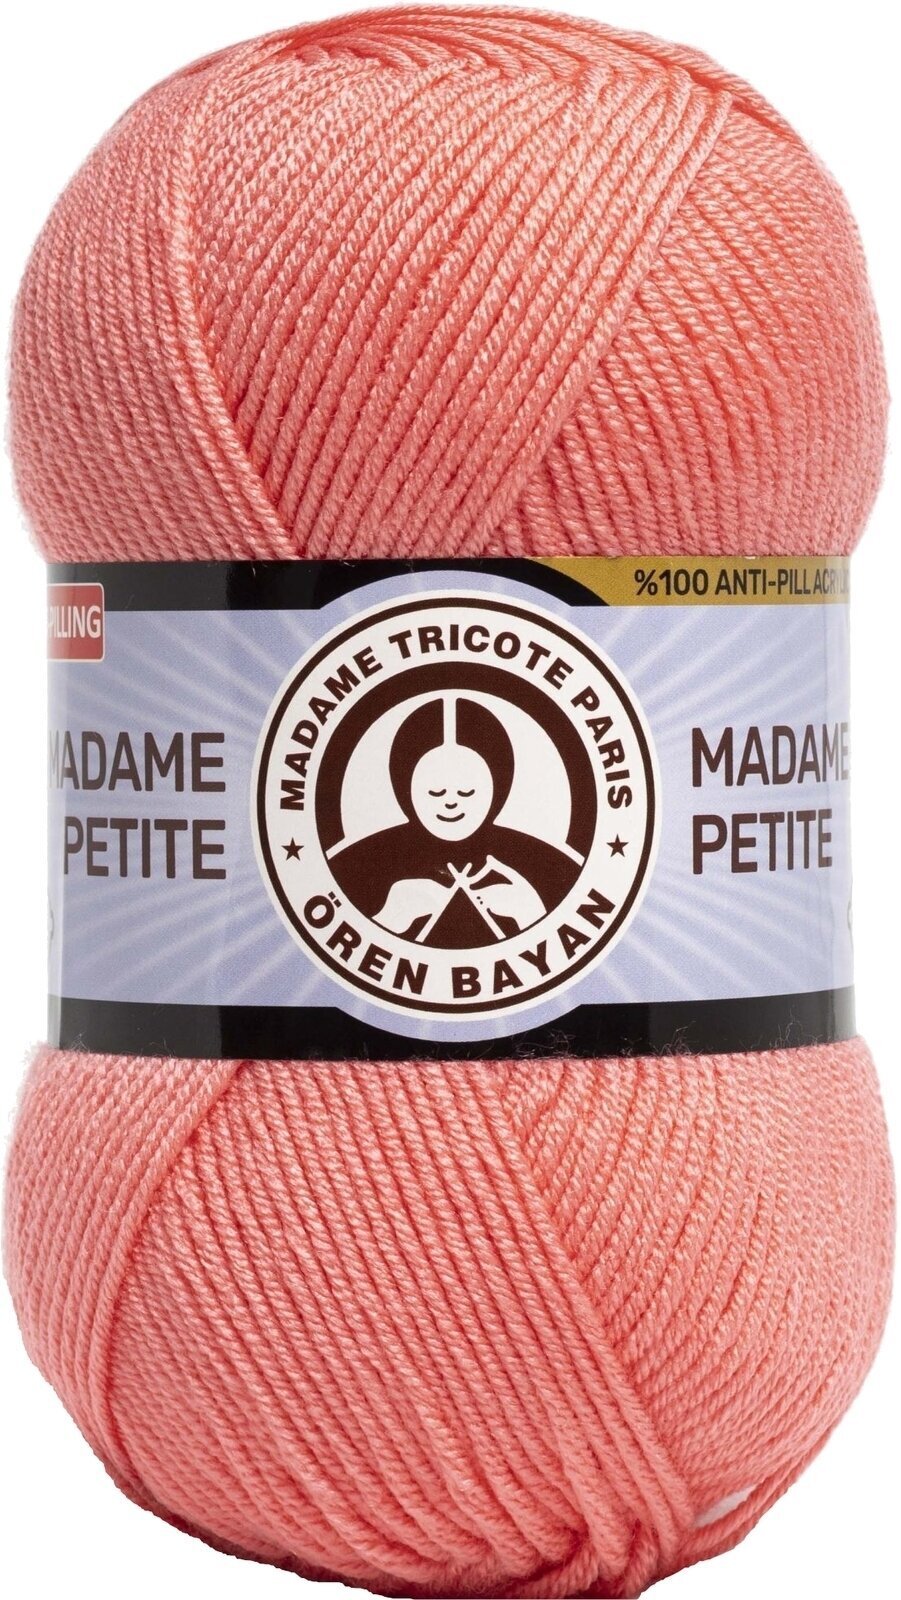 Breigaren Madame Tricote Paris Madame Petite 3848 36 Breigaren